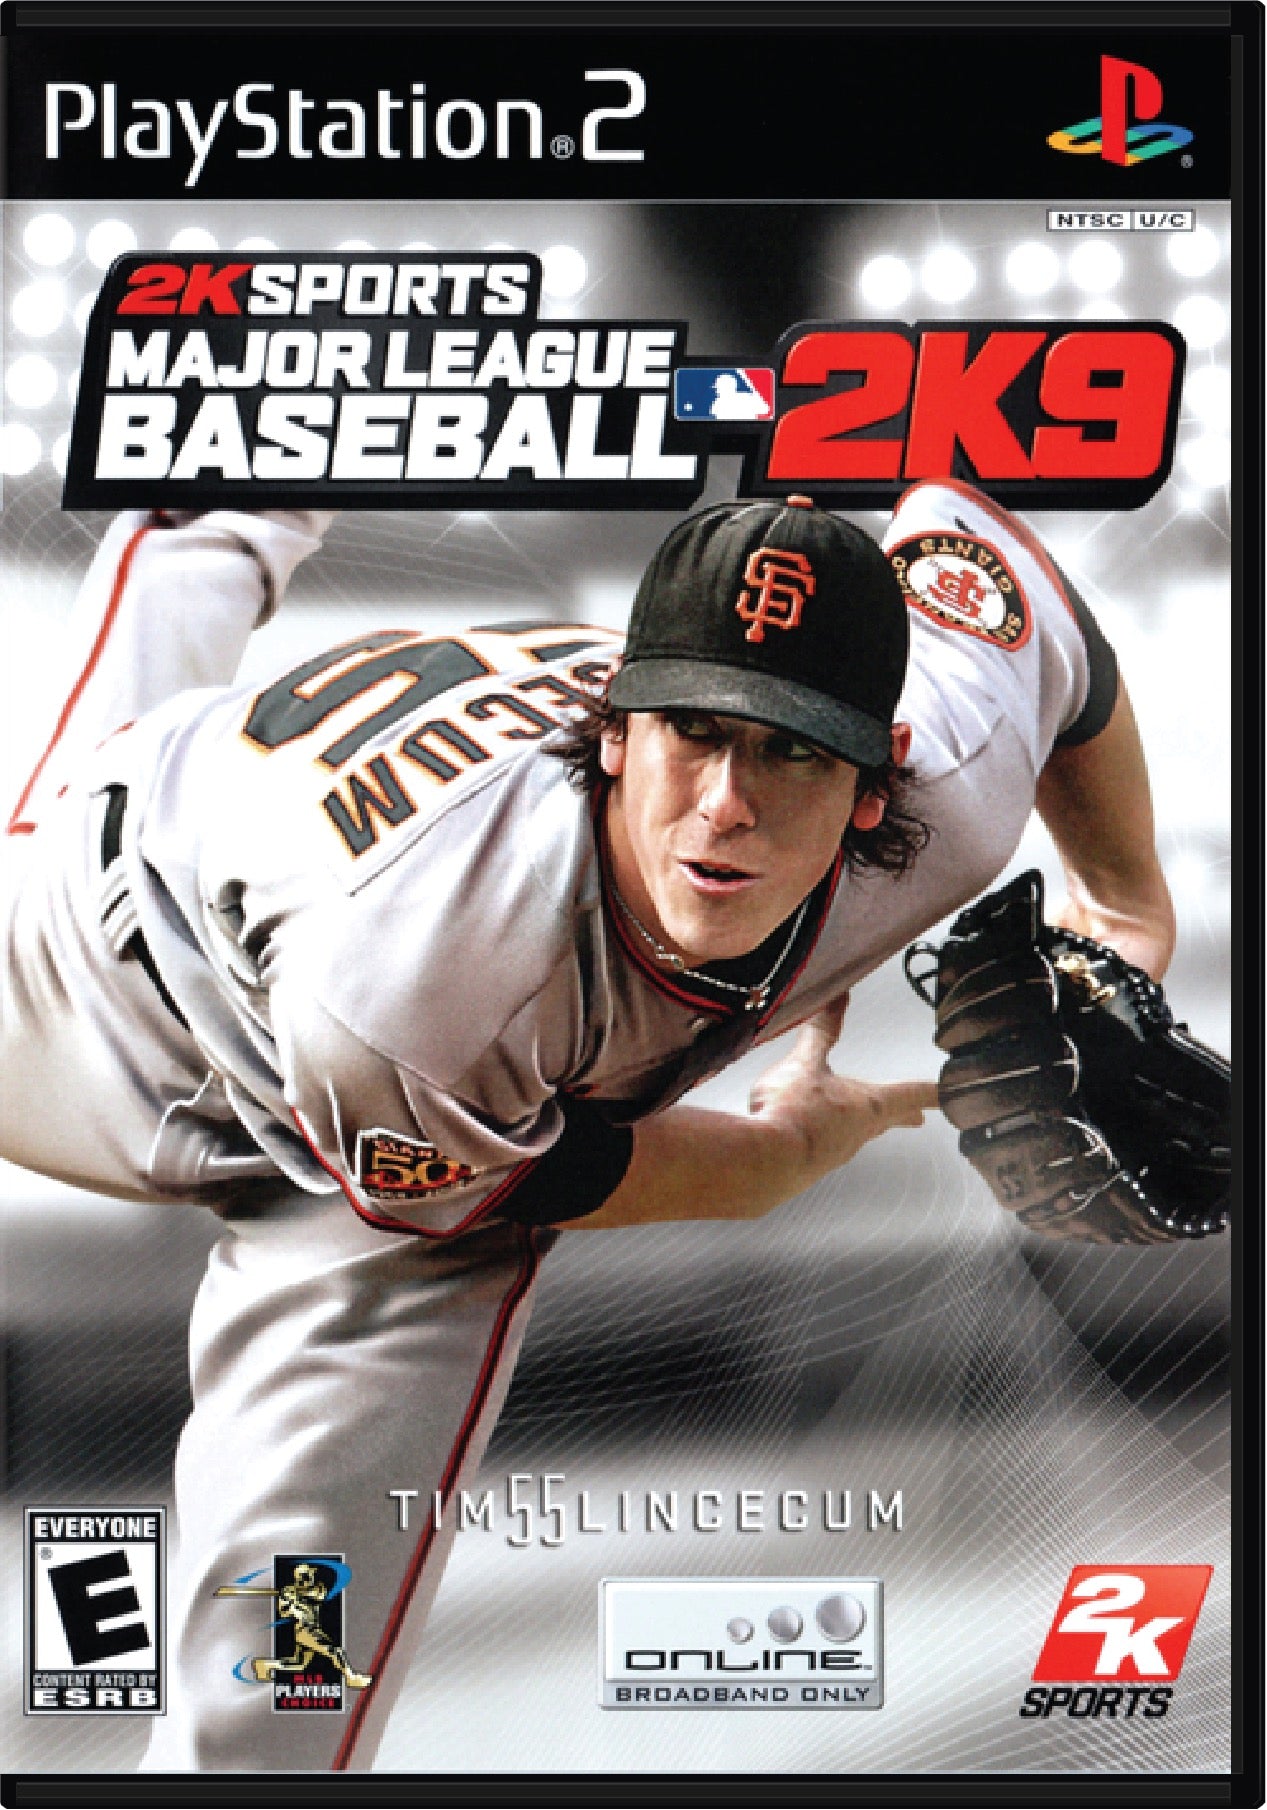 Major League Baseball 2K9 Cover Art and Product Photo